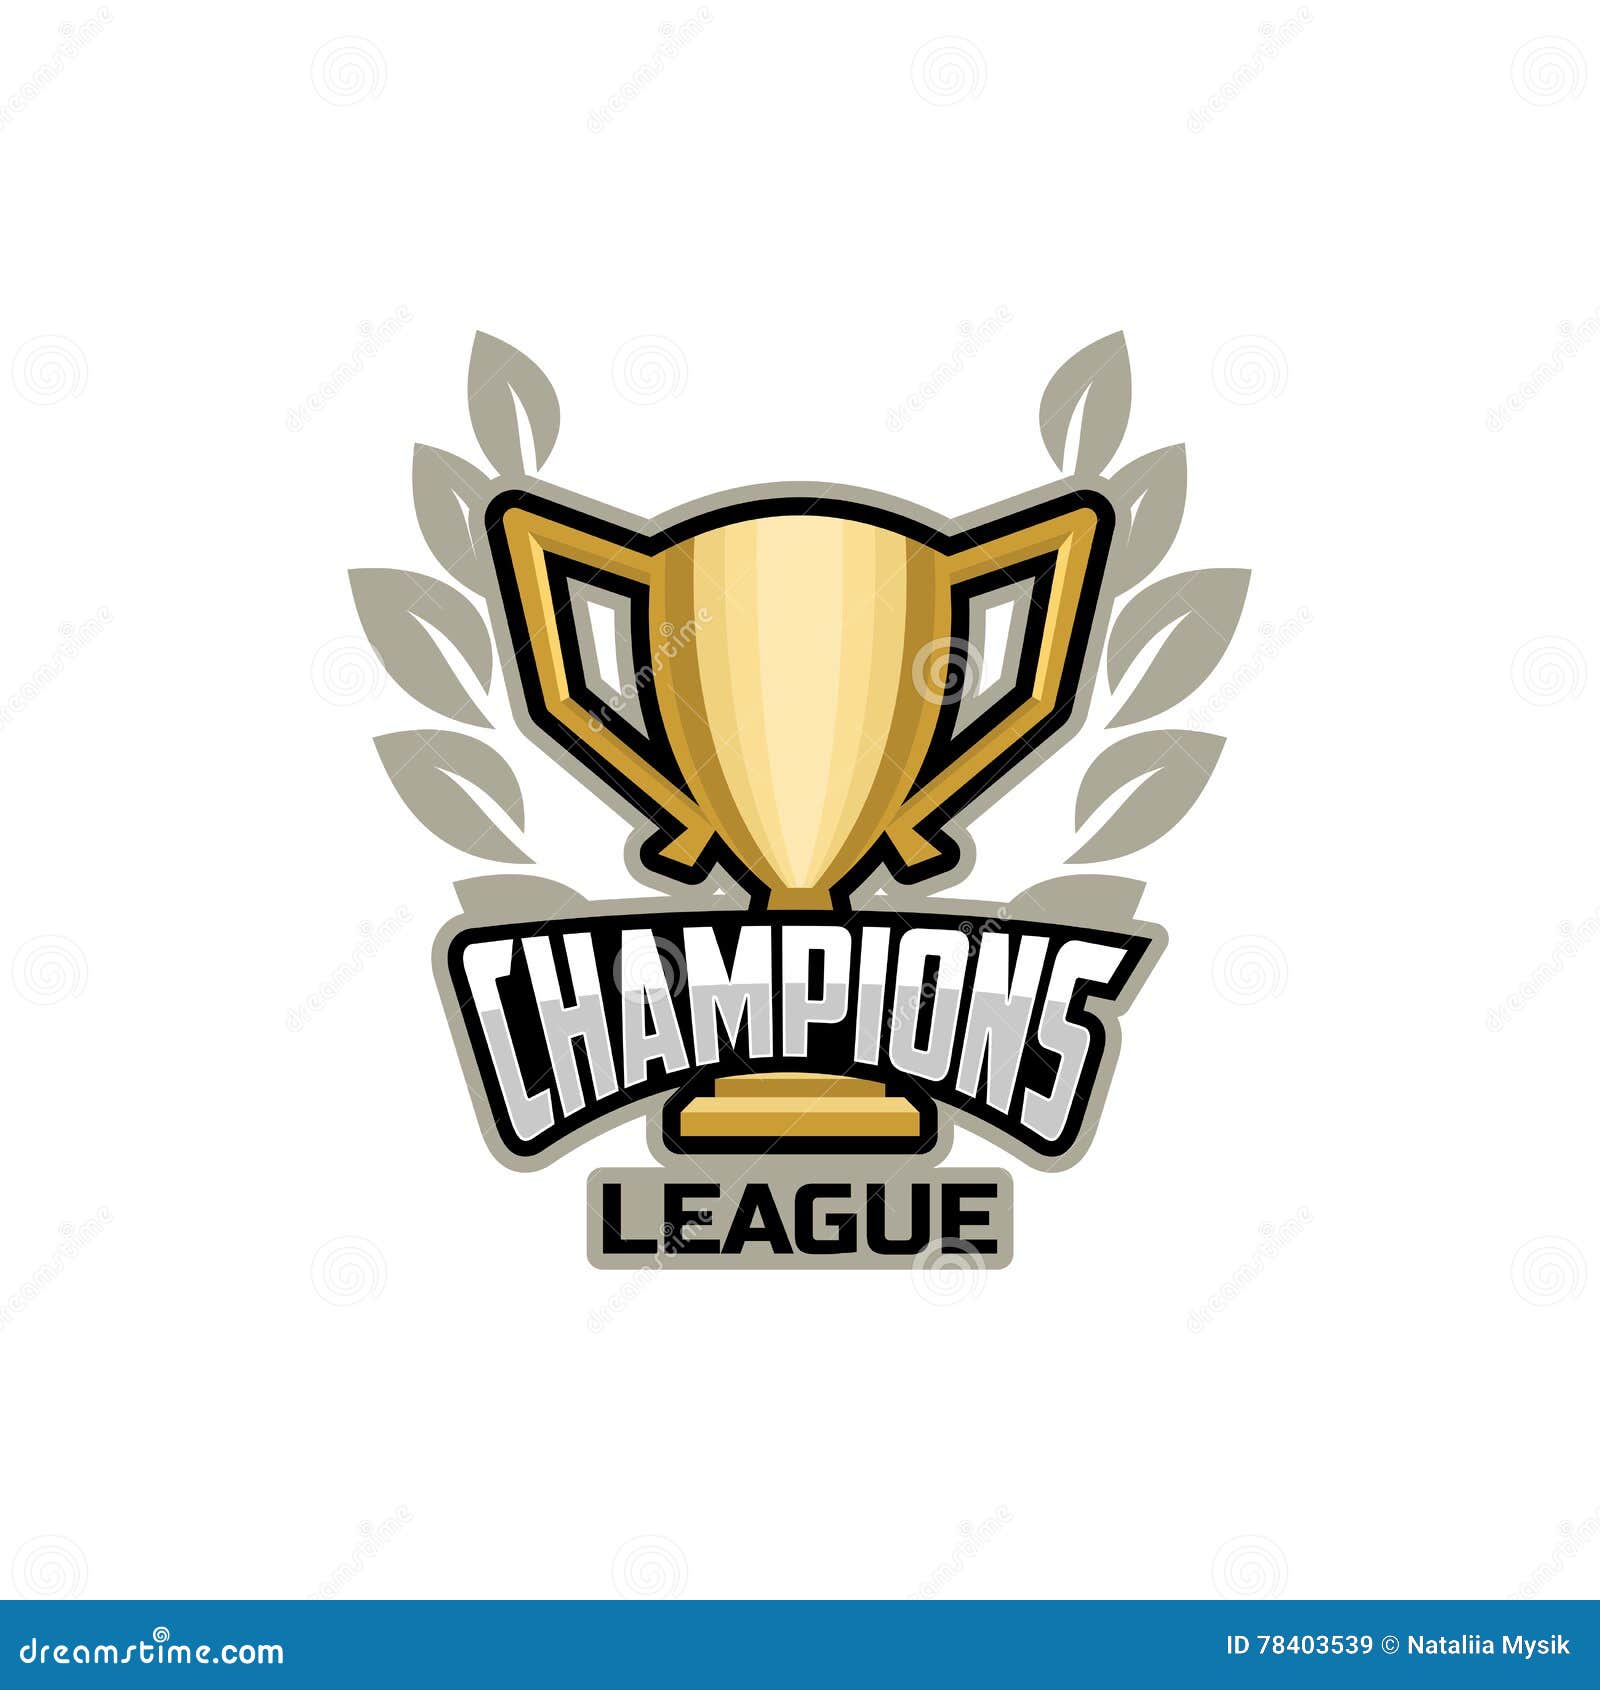 Premium Vector  Esports champion league badge logo